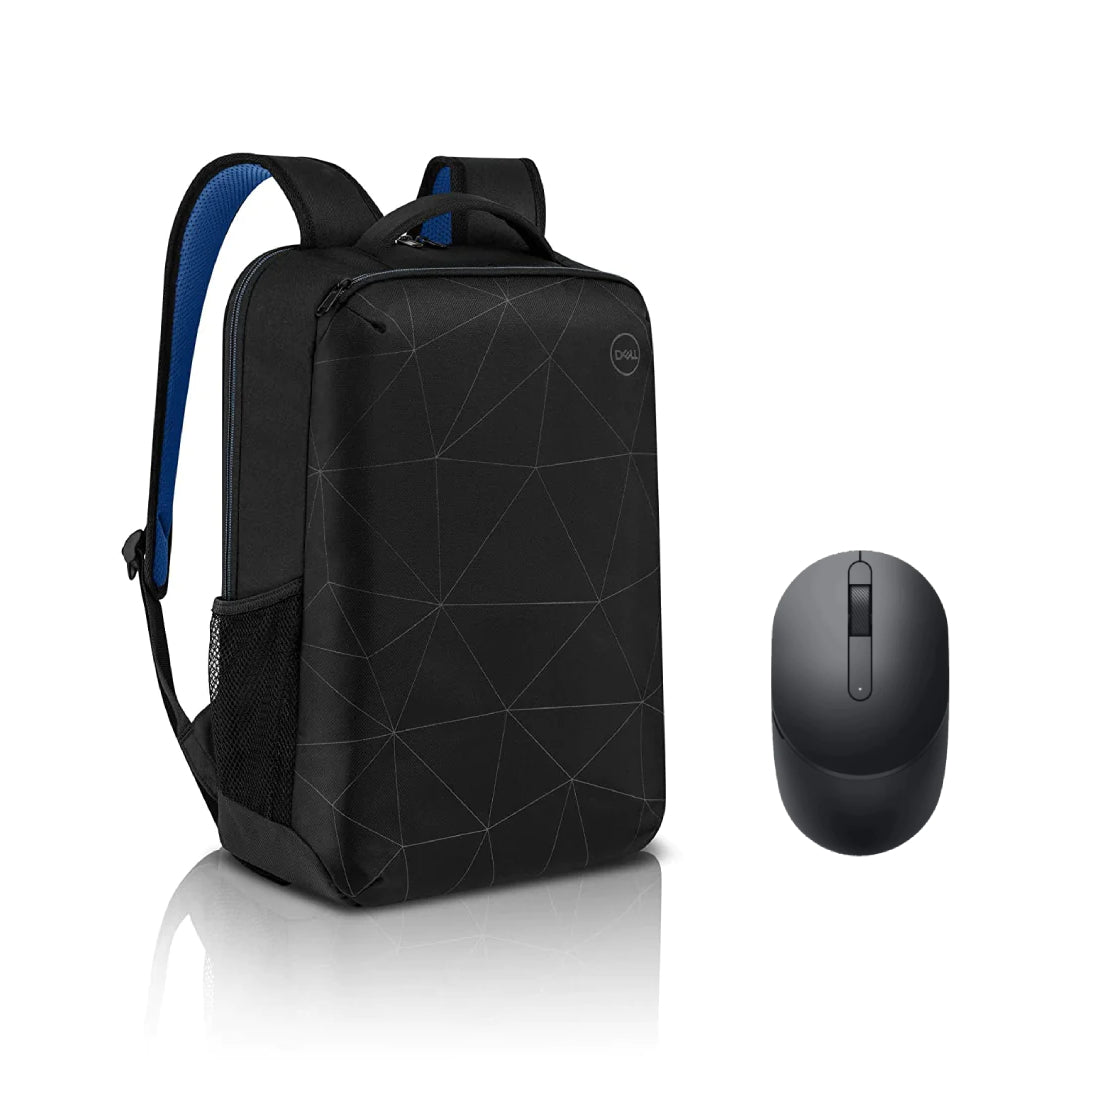 Dell ES1520P Backpack & MS3320W Wireless Mouse - Black - حقيبة حاسوب محمول و فأرة - Store 974 | ستور ٩٧٤